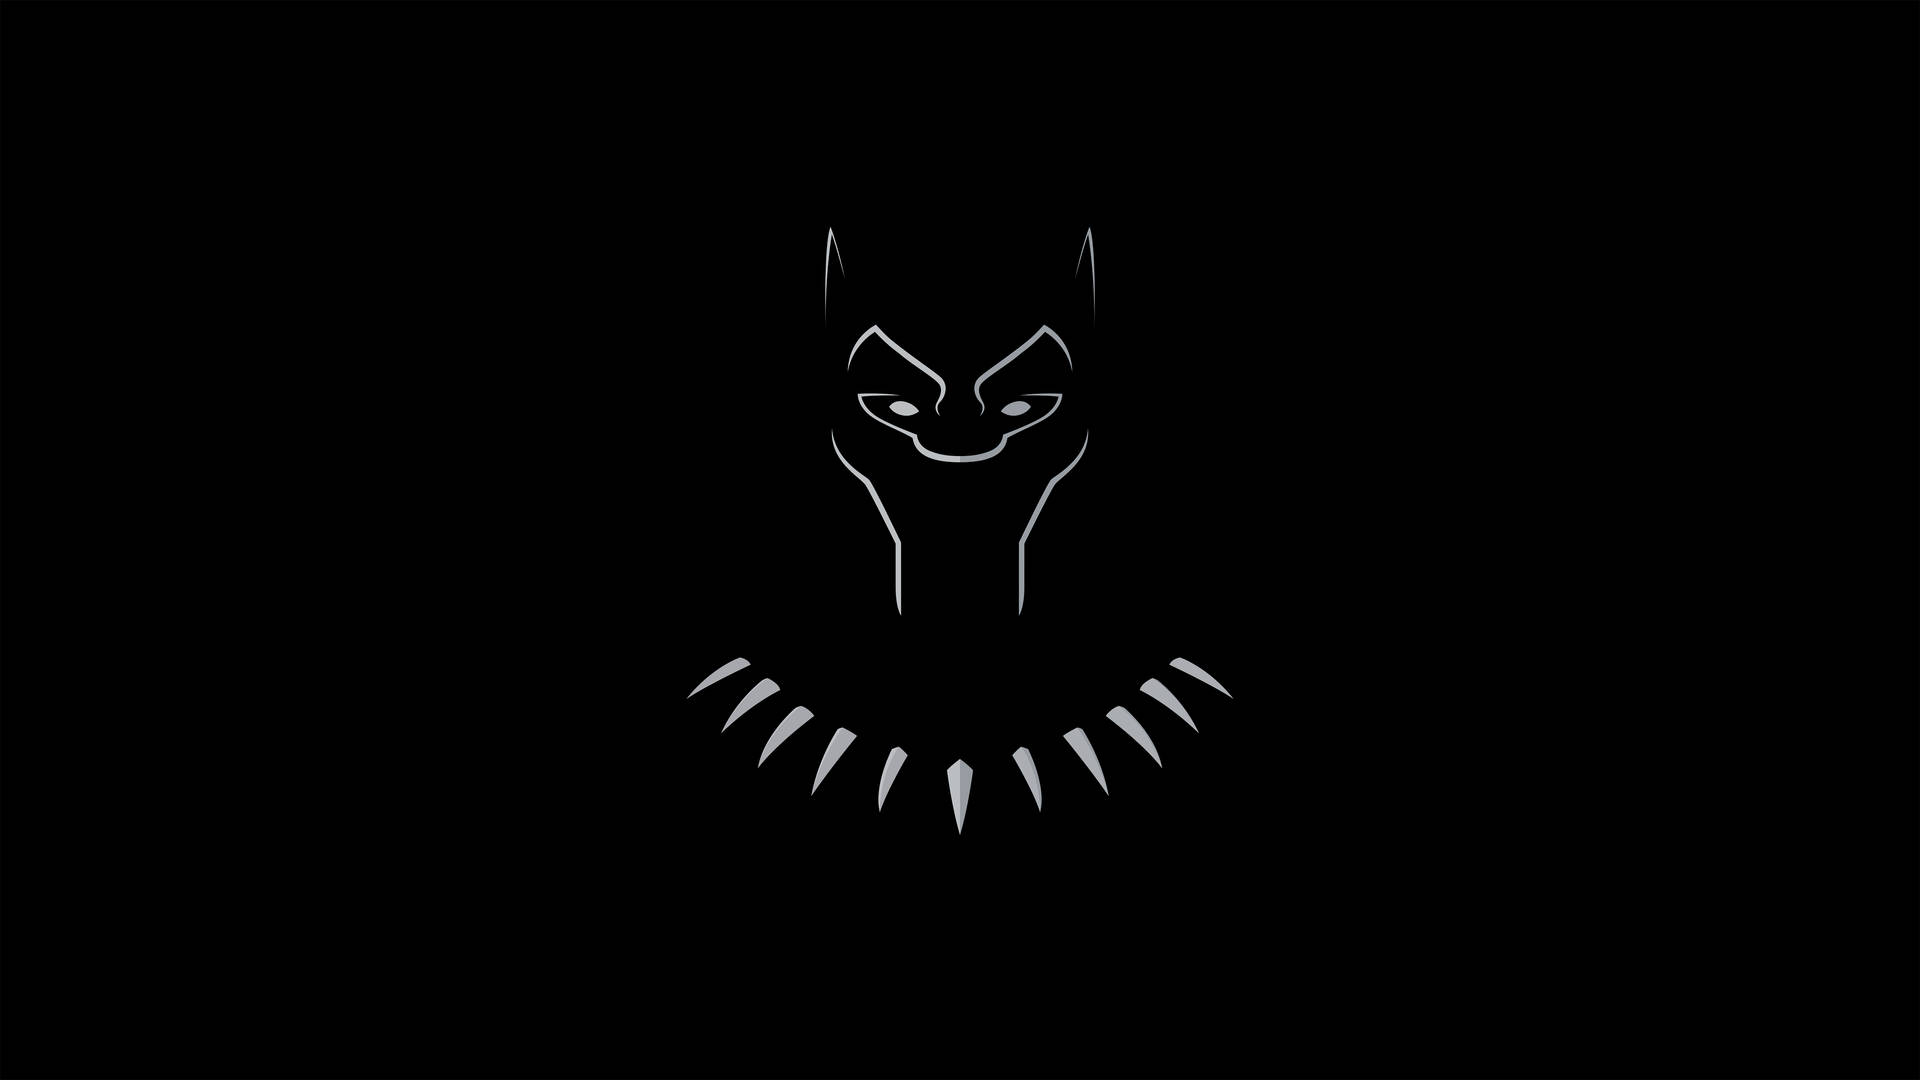 Minimal Black Panther 4k Ultra Hd Dark Background